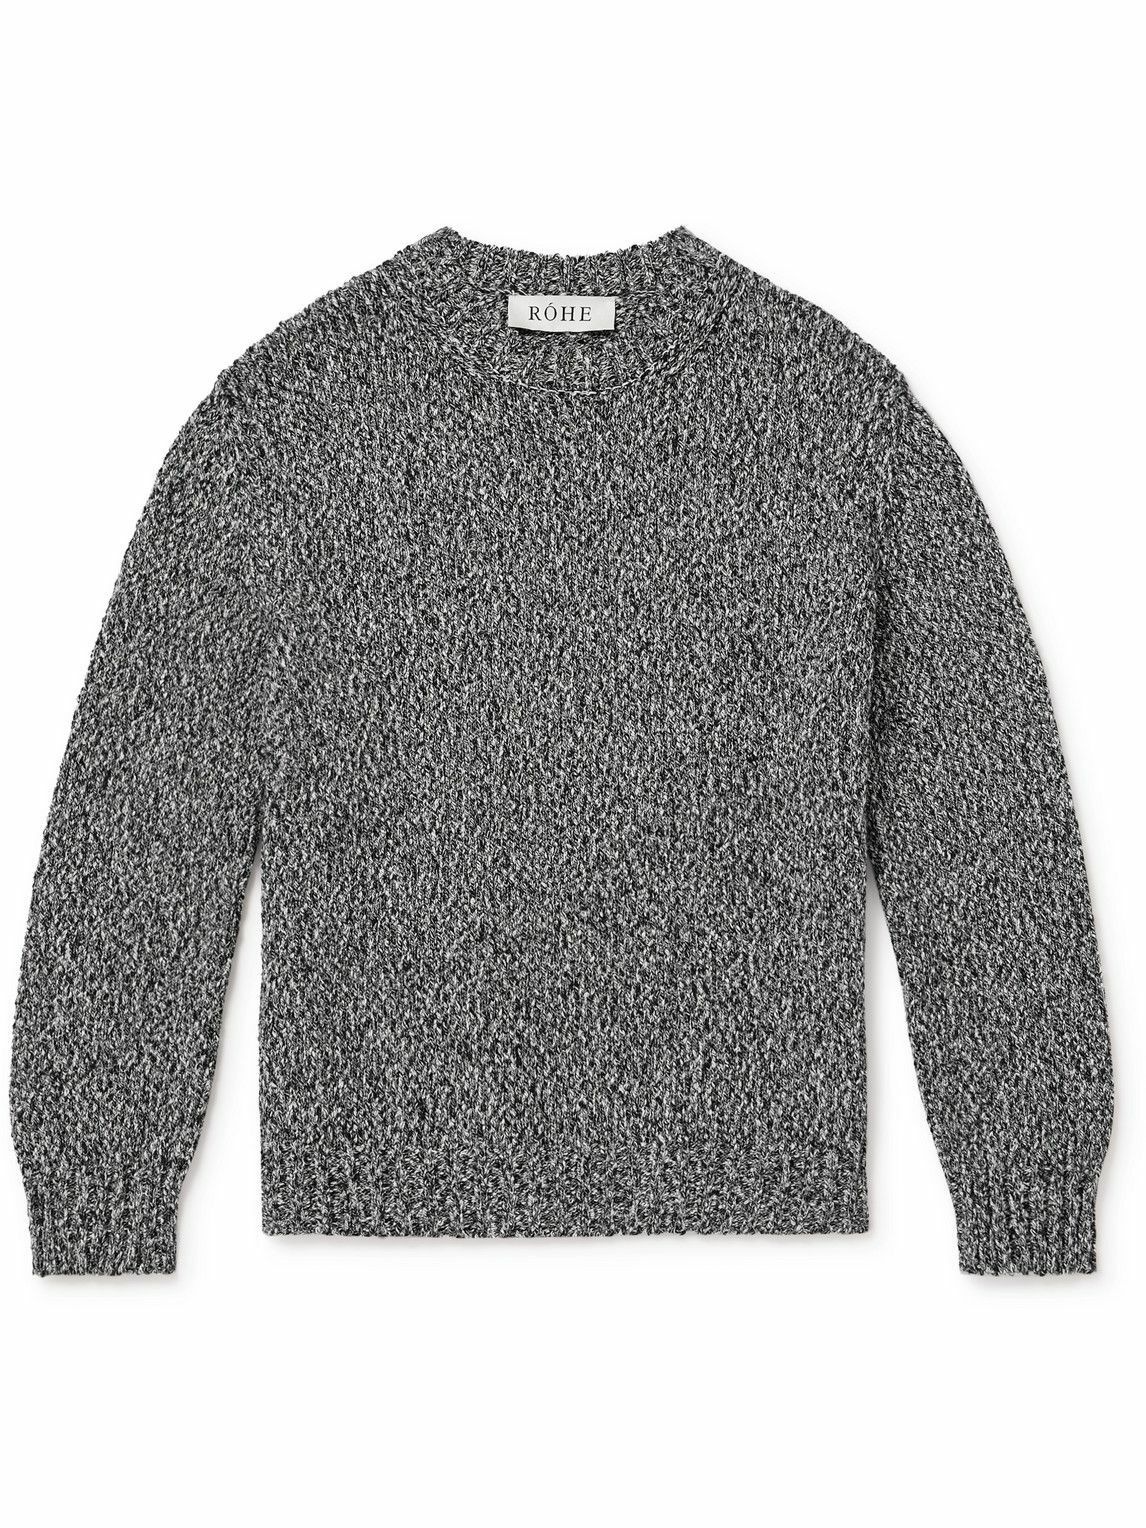 Photo: RÓHE - Mouliné Cotton Sweater - Gray